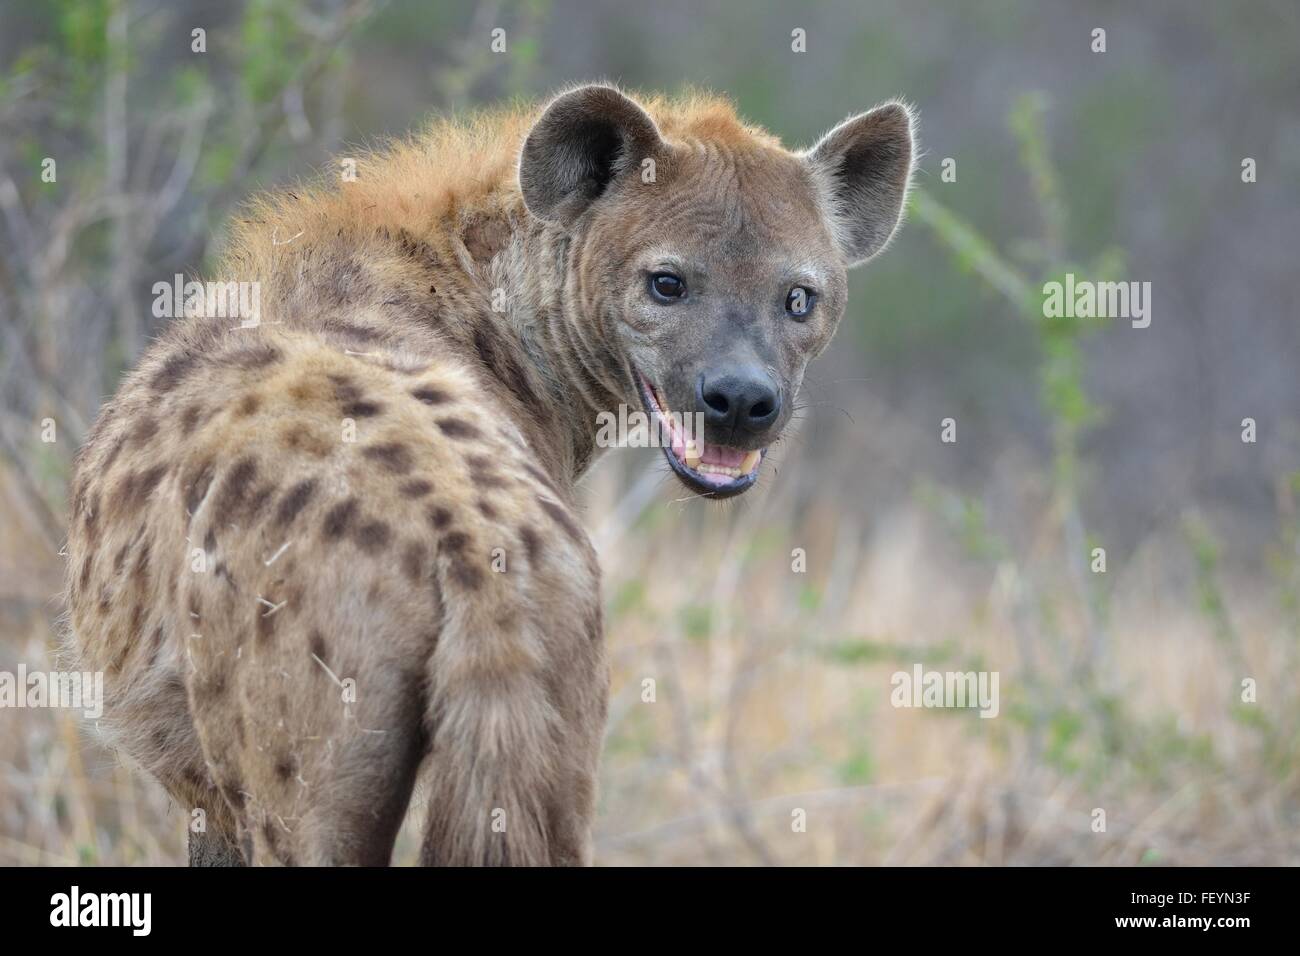 Spotted Hyena (Crocuta crocuta), maschio adulto, in piedi, la bocca aperta, la mattina presto, Kruger National Park, Sud Africa e Africa Foto Stock